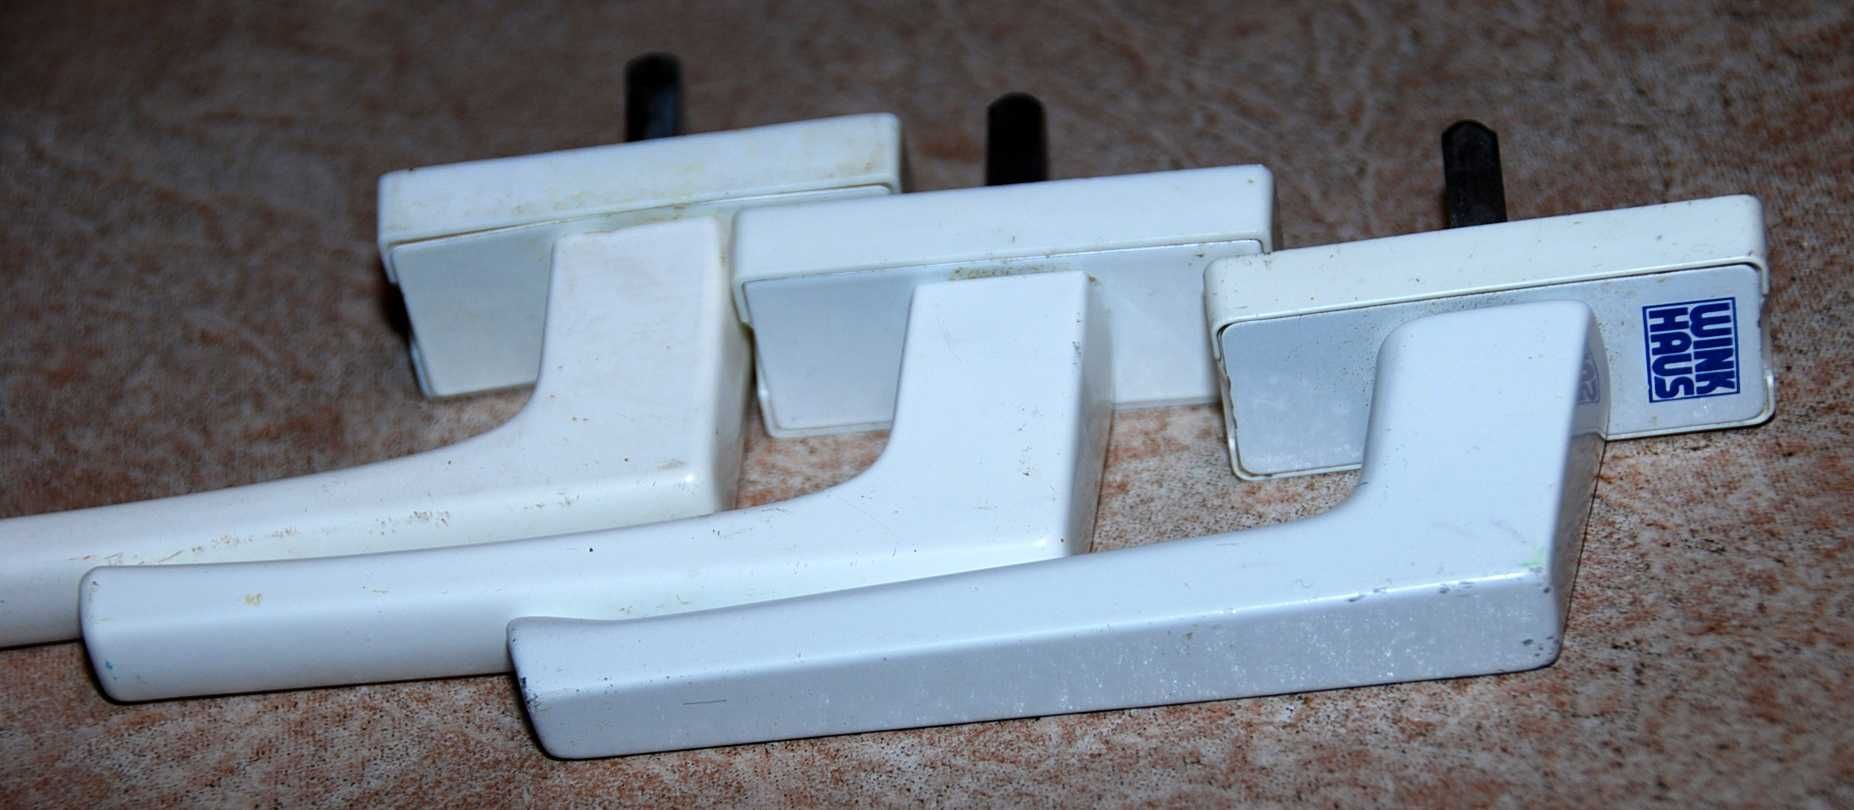 Winkhaus klamka do okien PCV metalowa biała